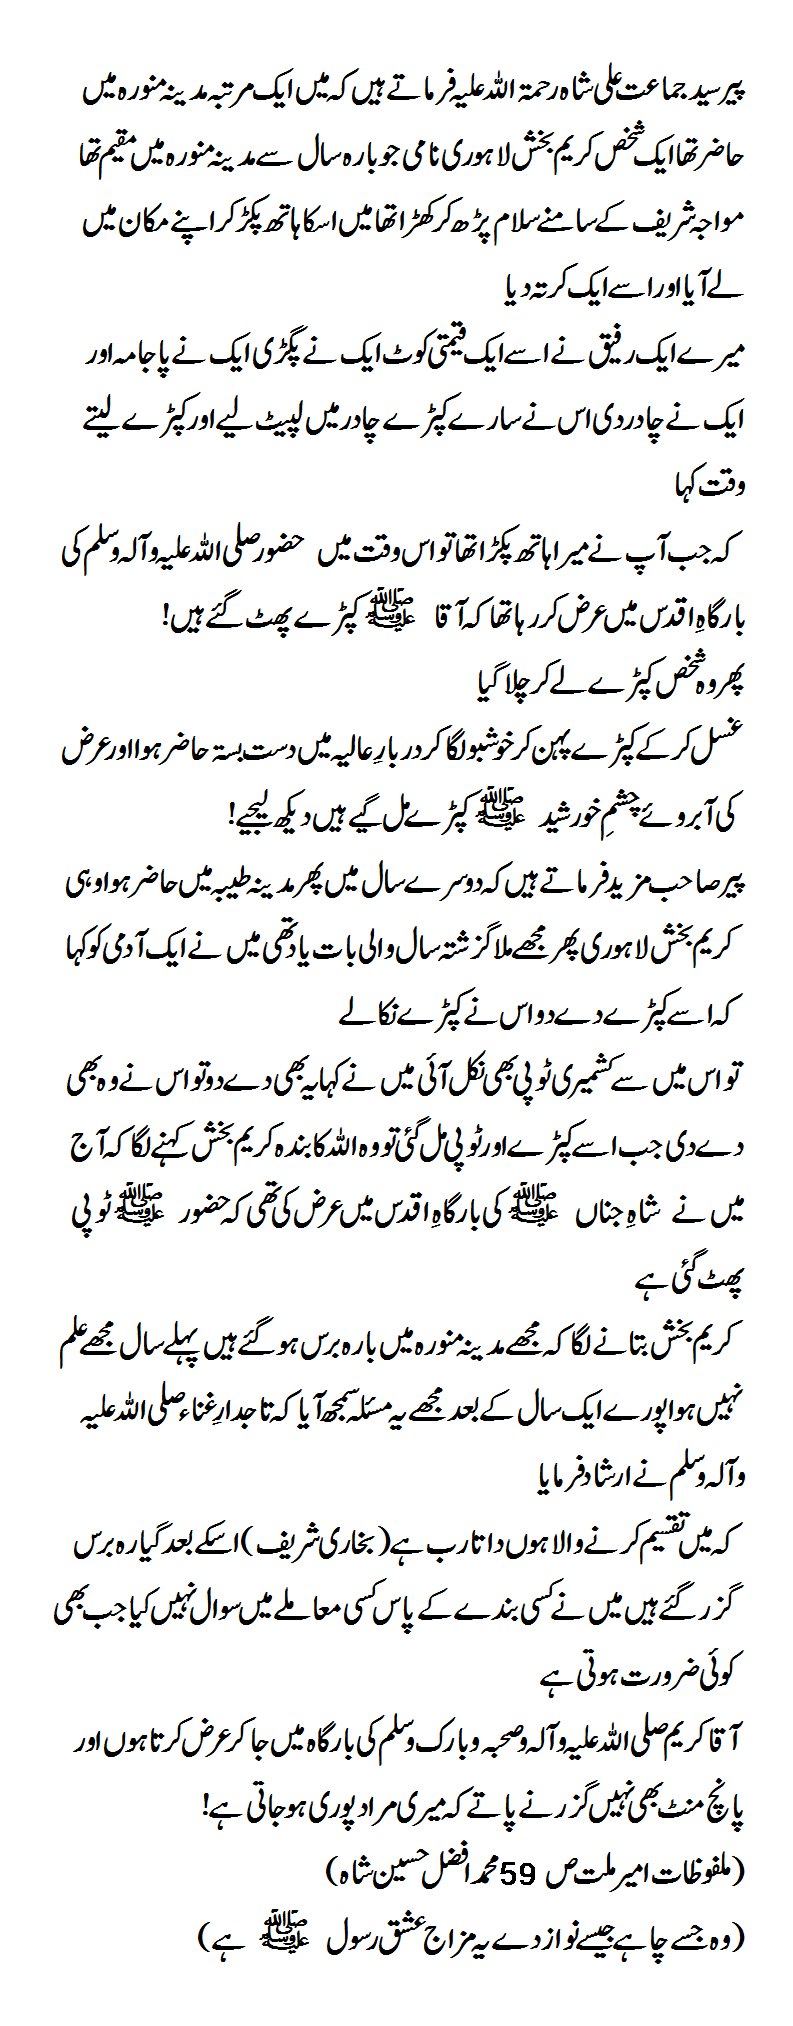 Pir Syed Jamaat Ali Shah (may God bless him and grant him peace) says